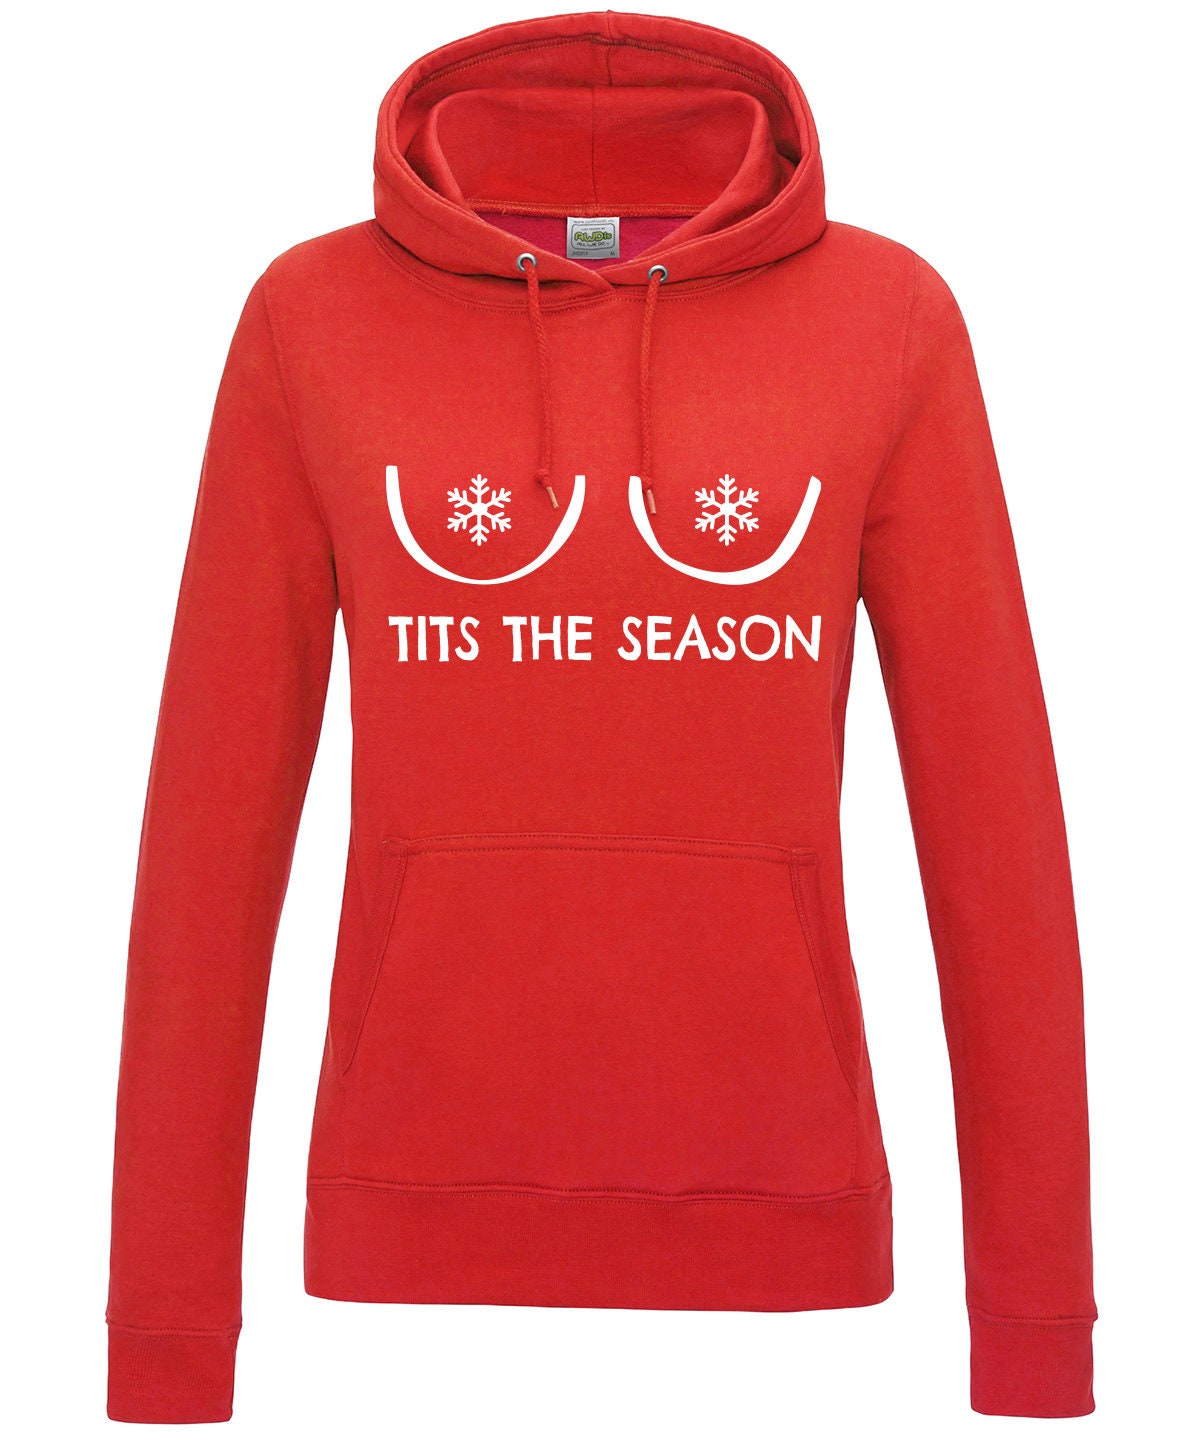 Tits The Season B Hoodie Cartoon Boobs JH001/JH001F Funny Rude Alternative Christmas Jumper Sweater Xmas Hooded Top